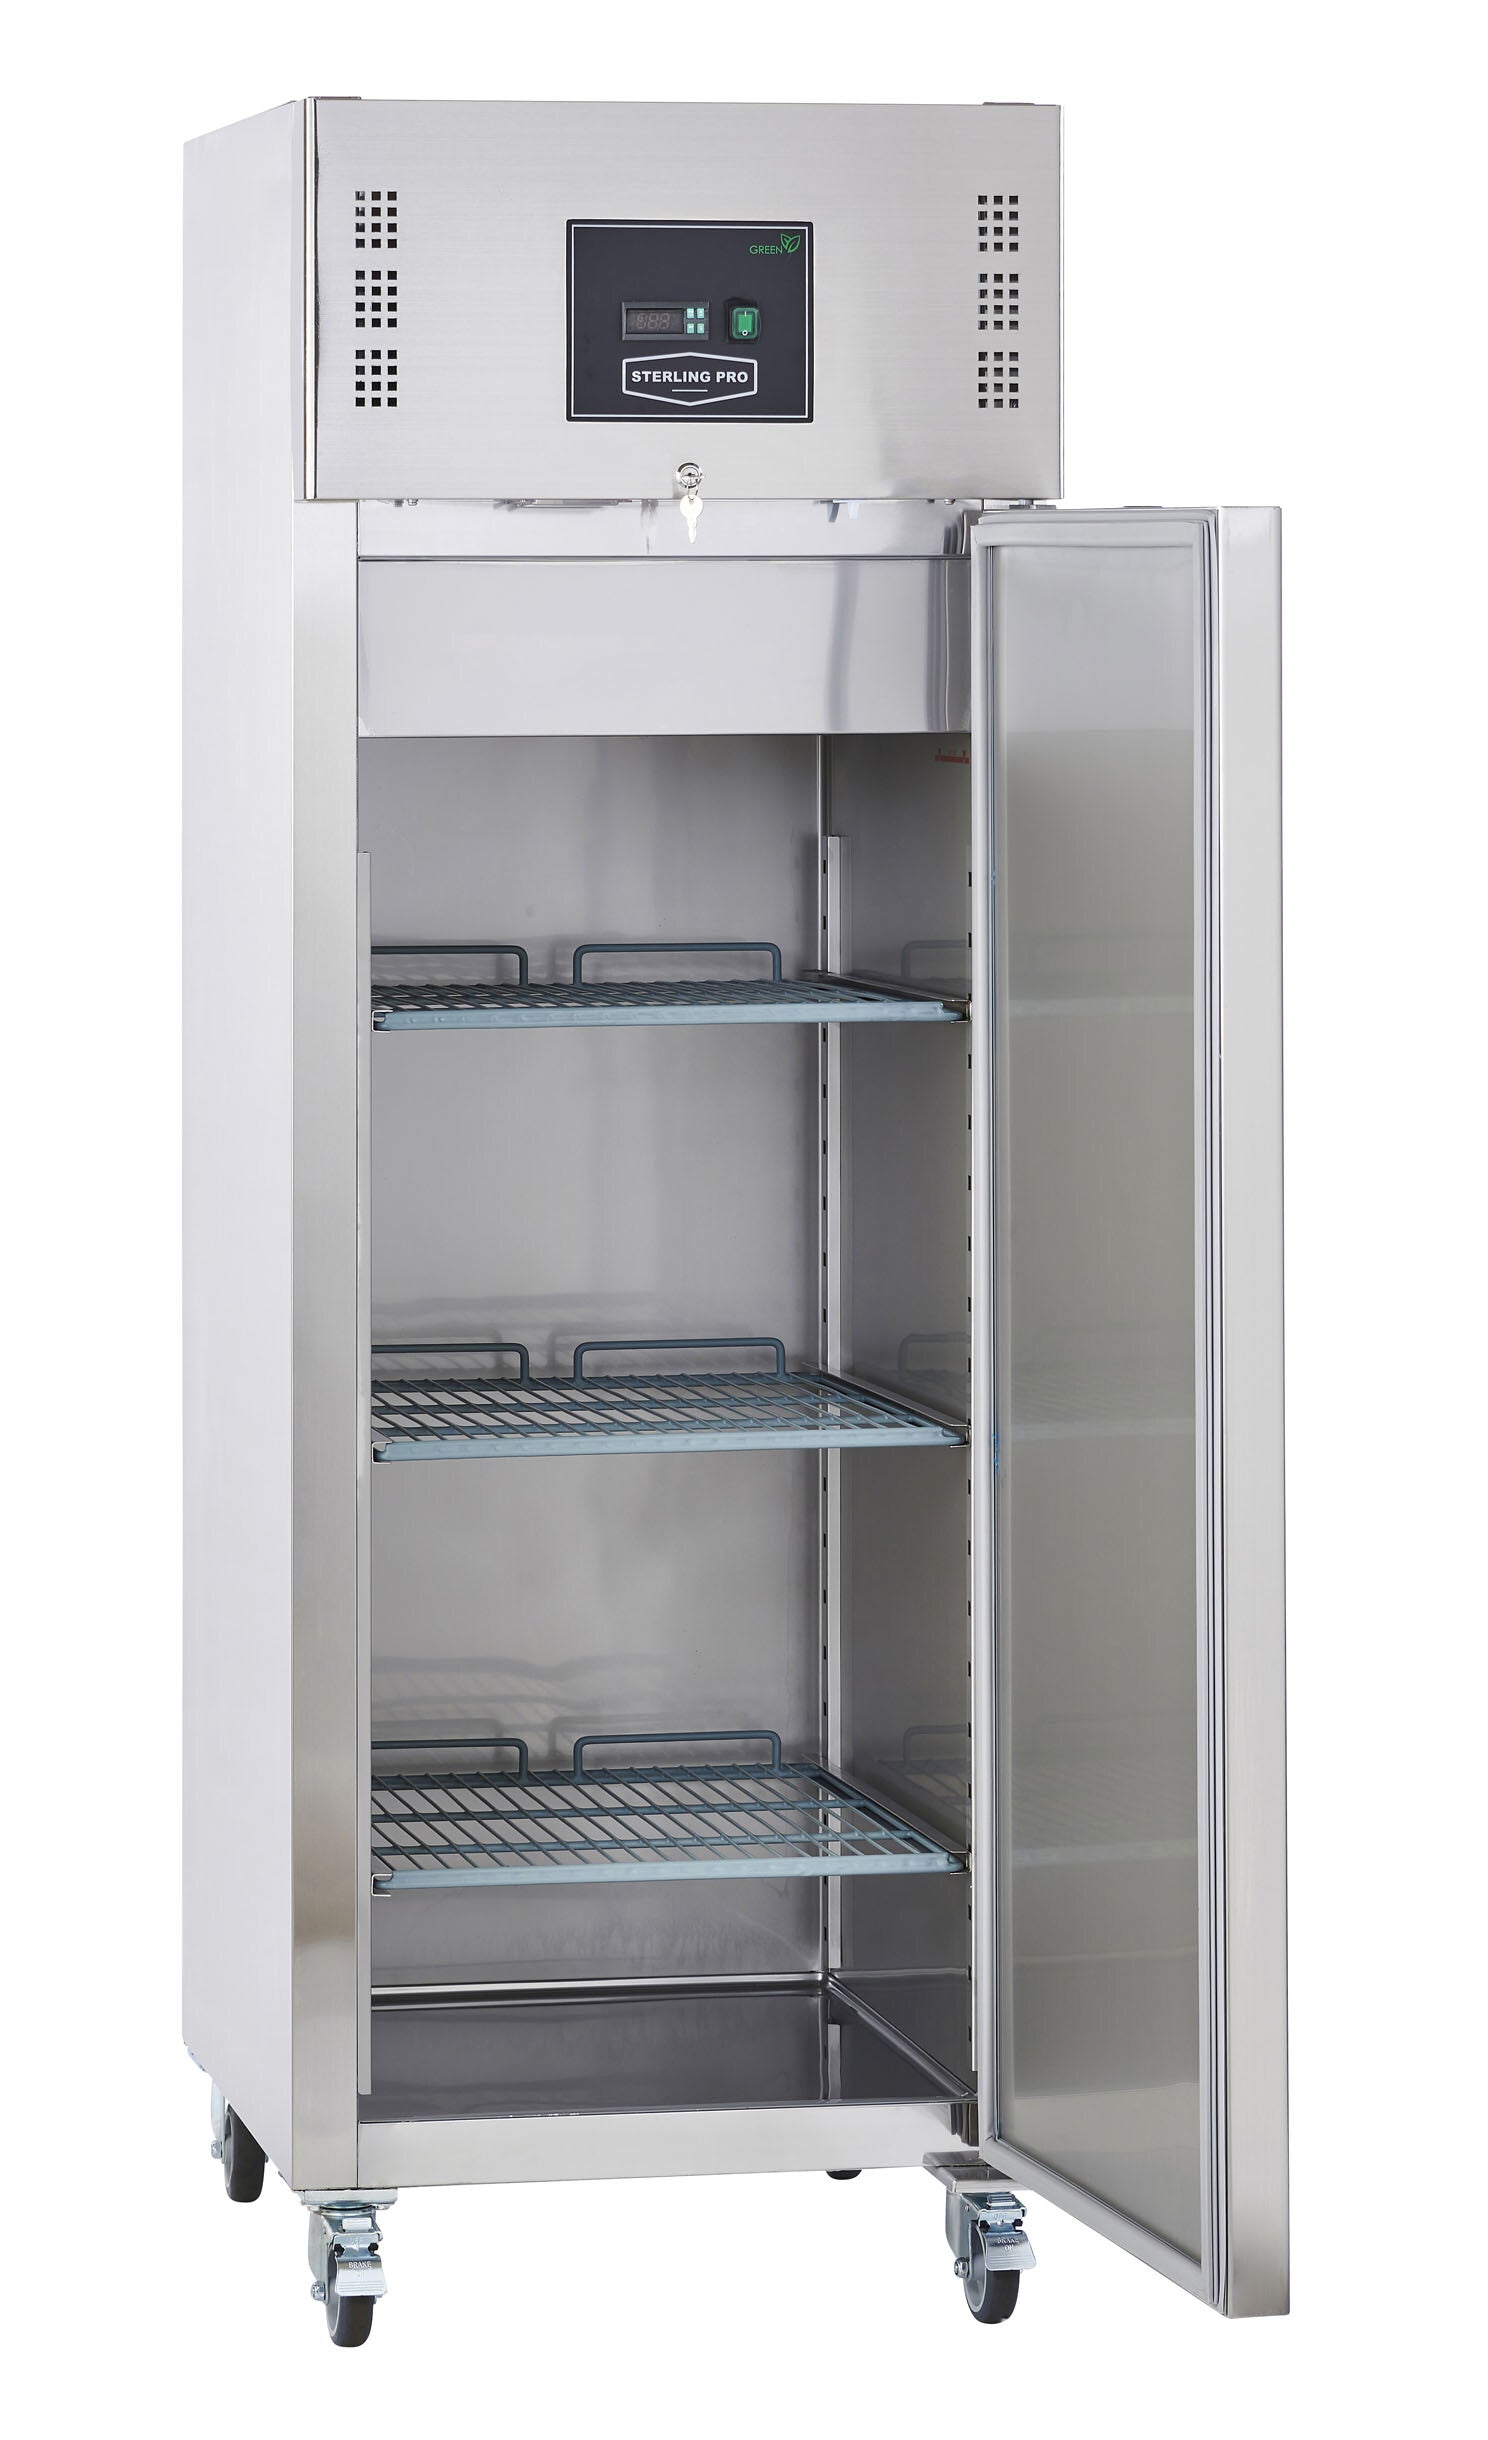 Sterling Pro Cobus SPR160PV Single Door Gastronorm Refrigerator  600 Litres